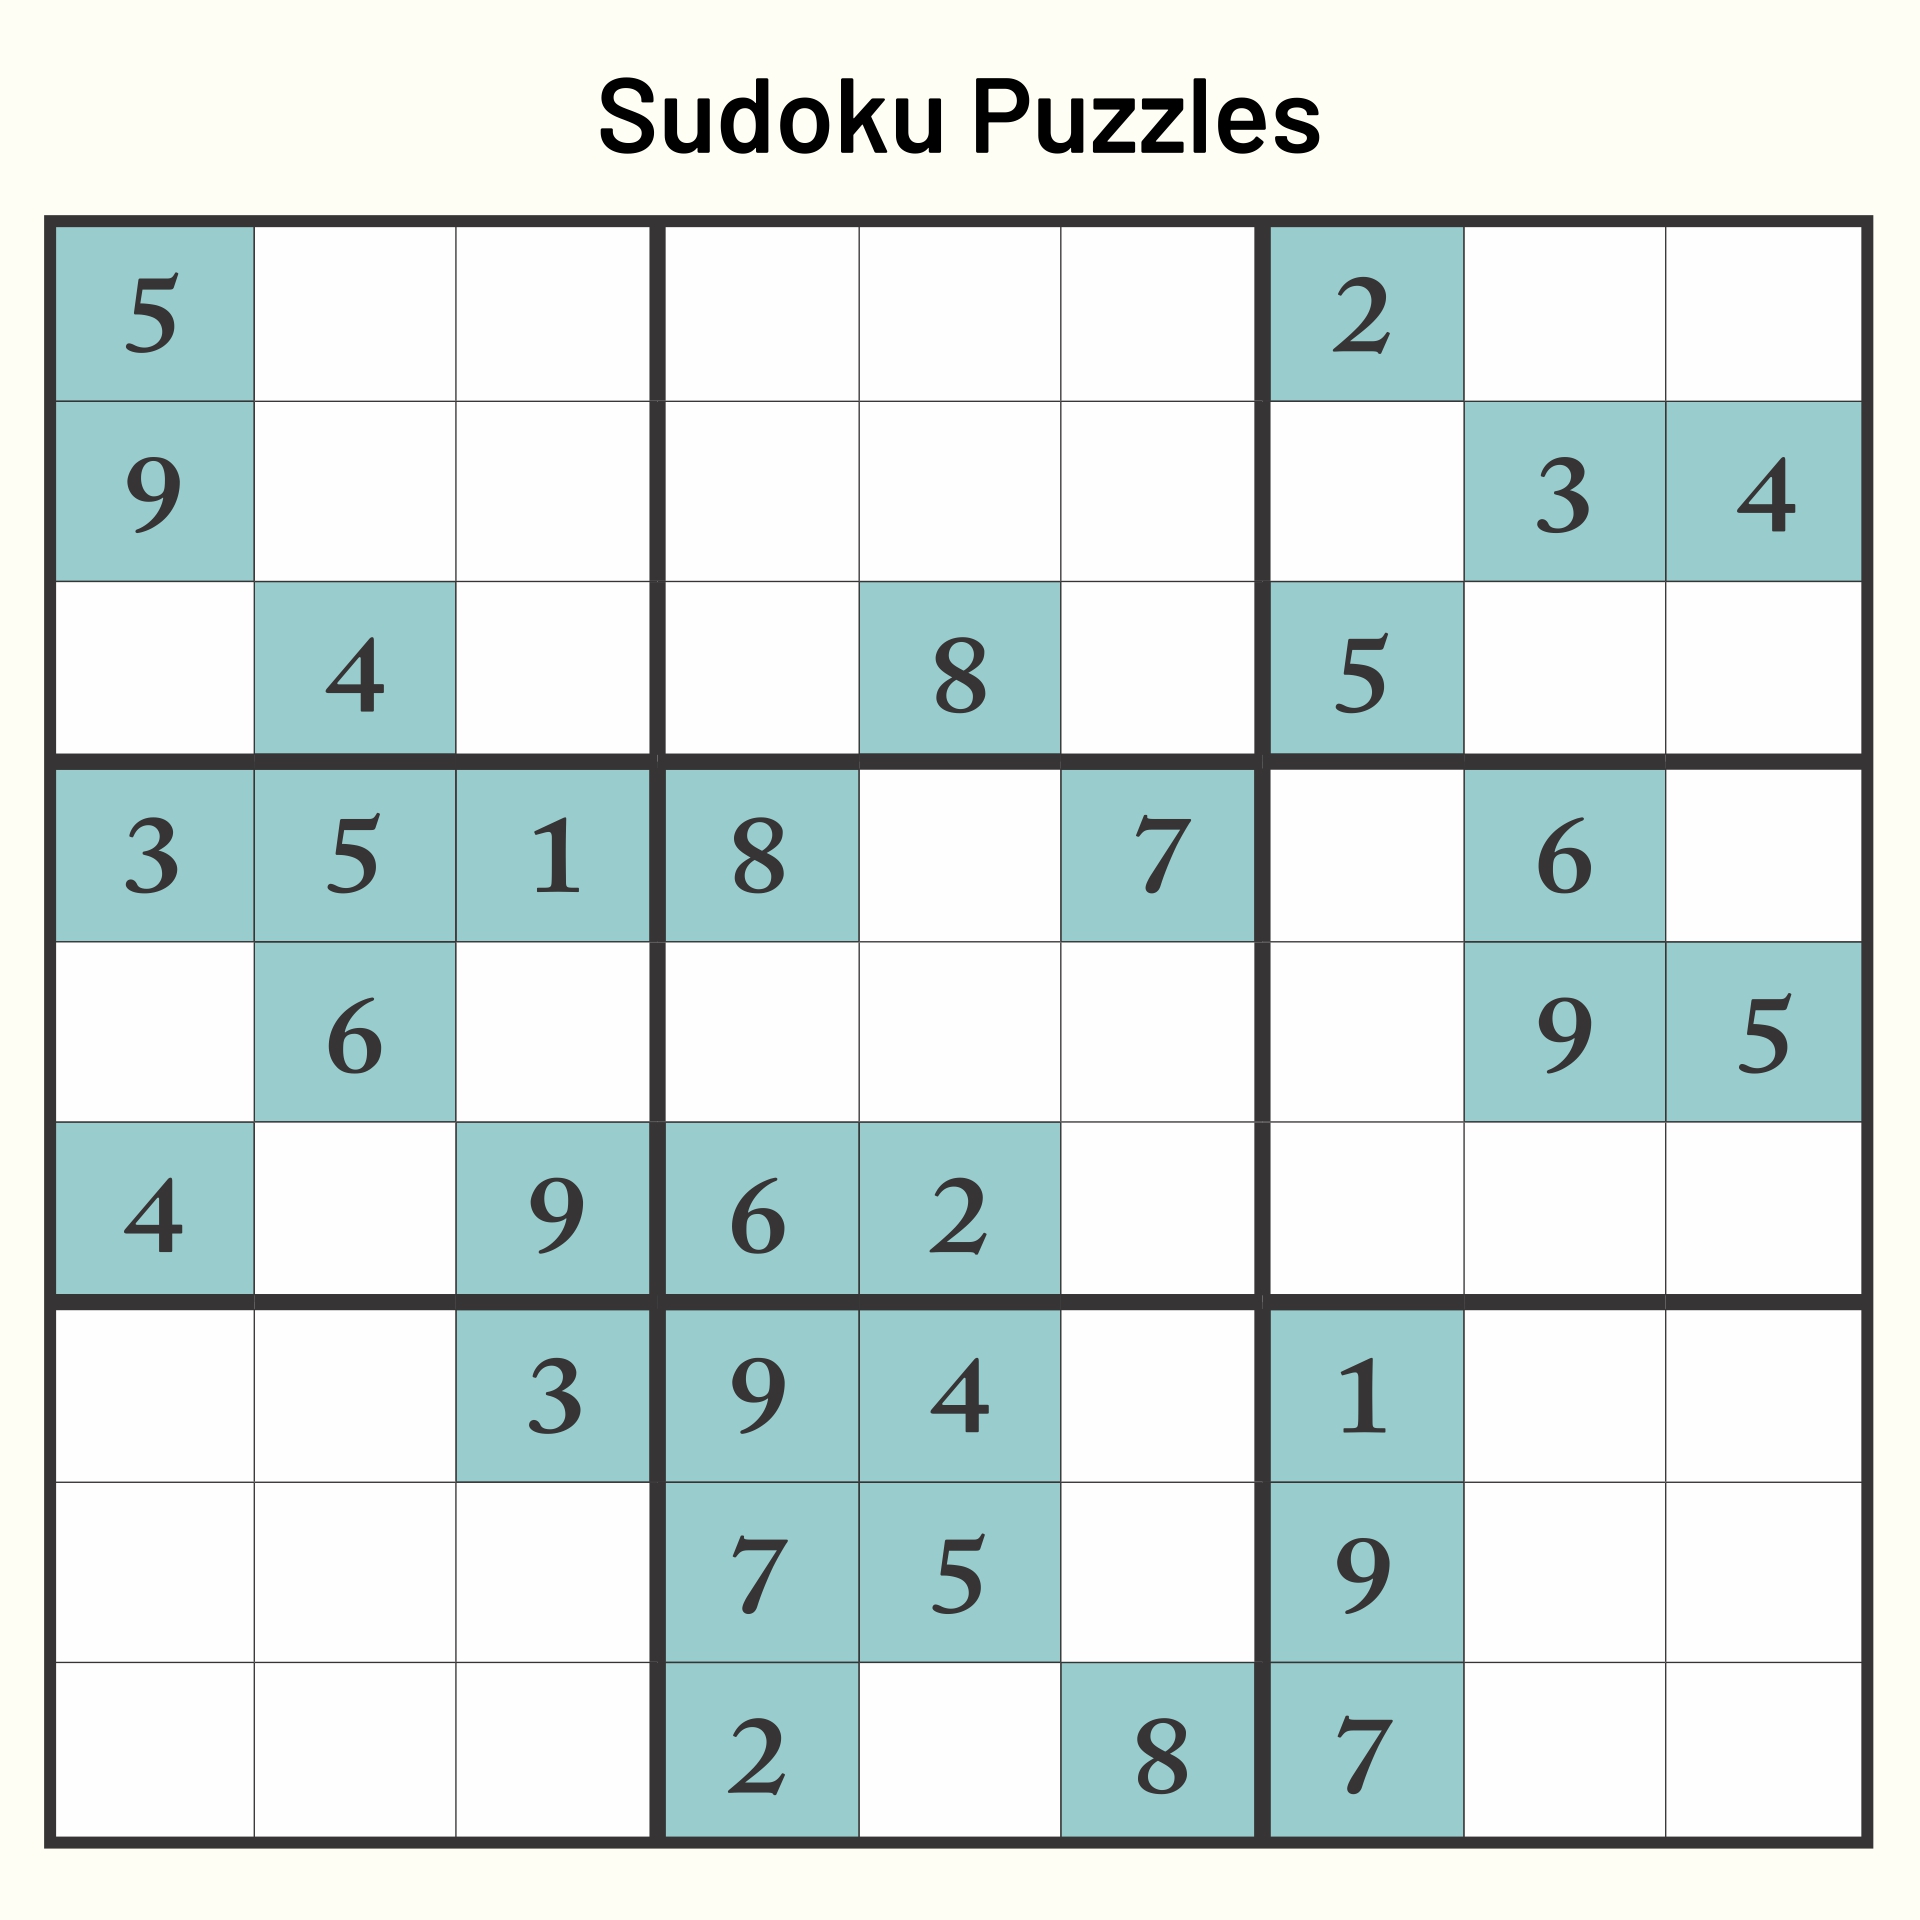 free printable jigsaw sudoku puzzle